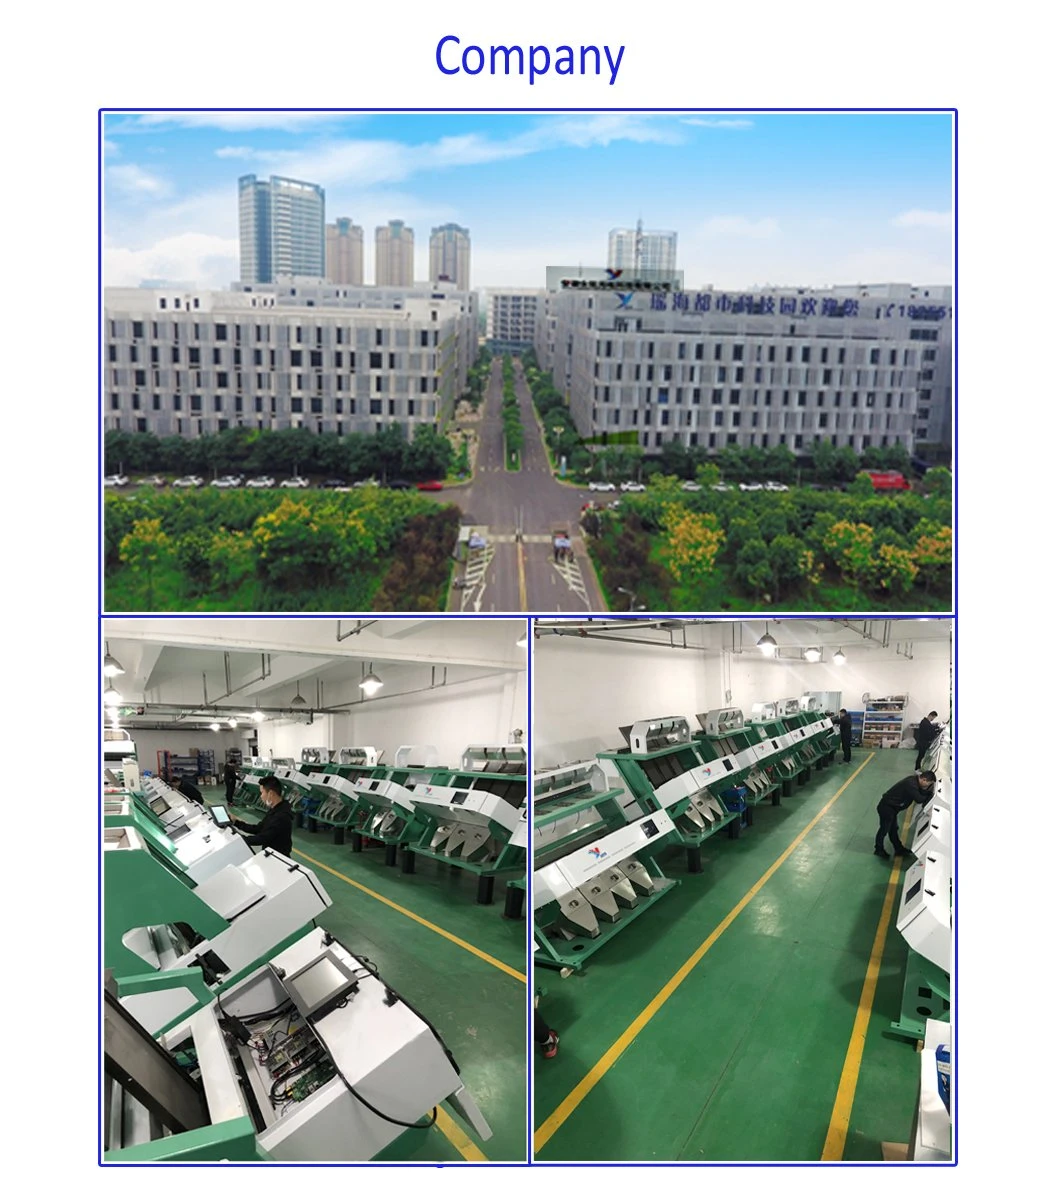 Made-in-China Metal Grading Machine Color Sorter Manufacturer